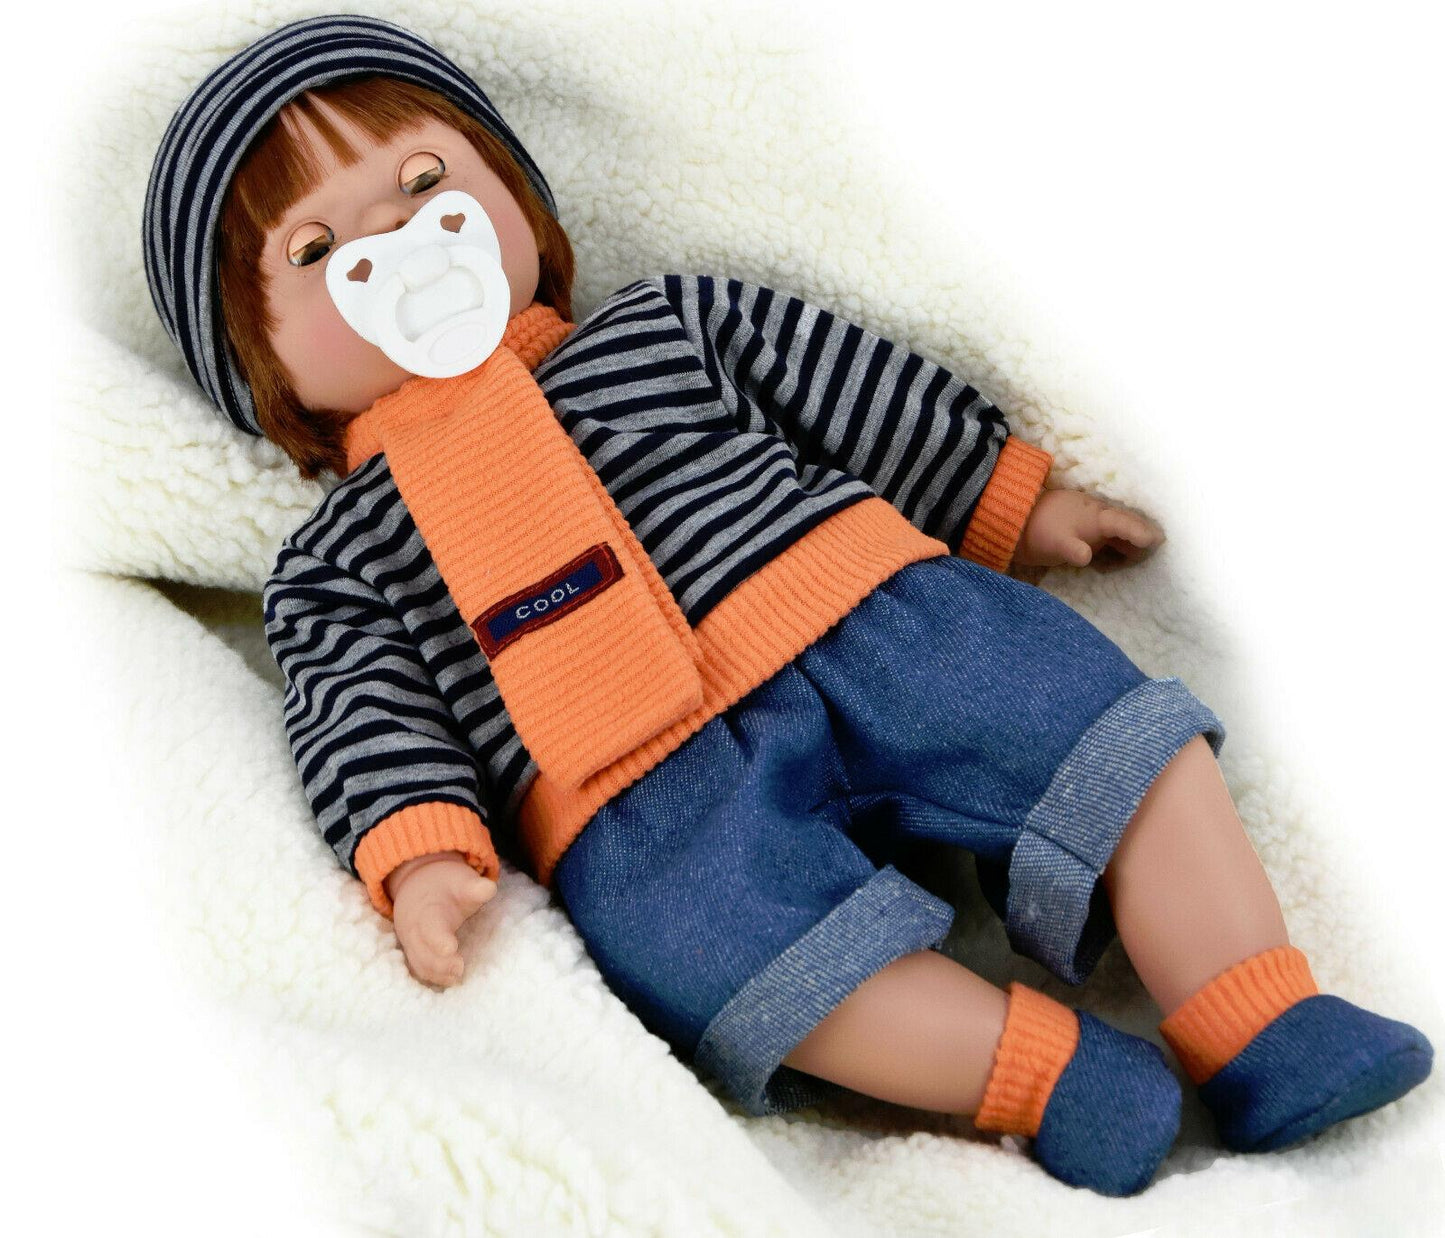 18" Sleeping Ginger Boy Dolls with Dummy & Sounds by BiBi Doll - UKBuyZone